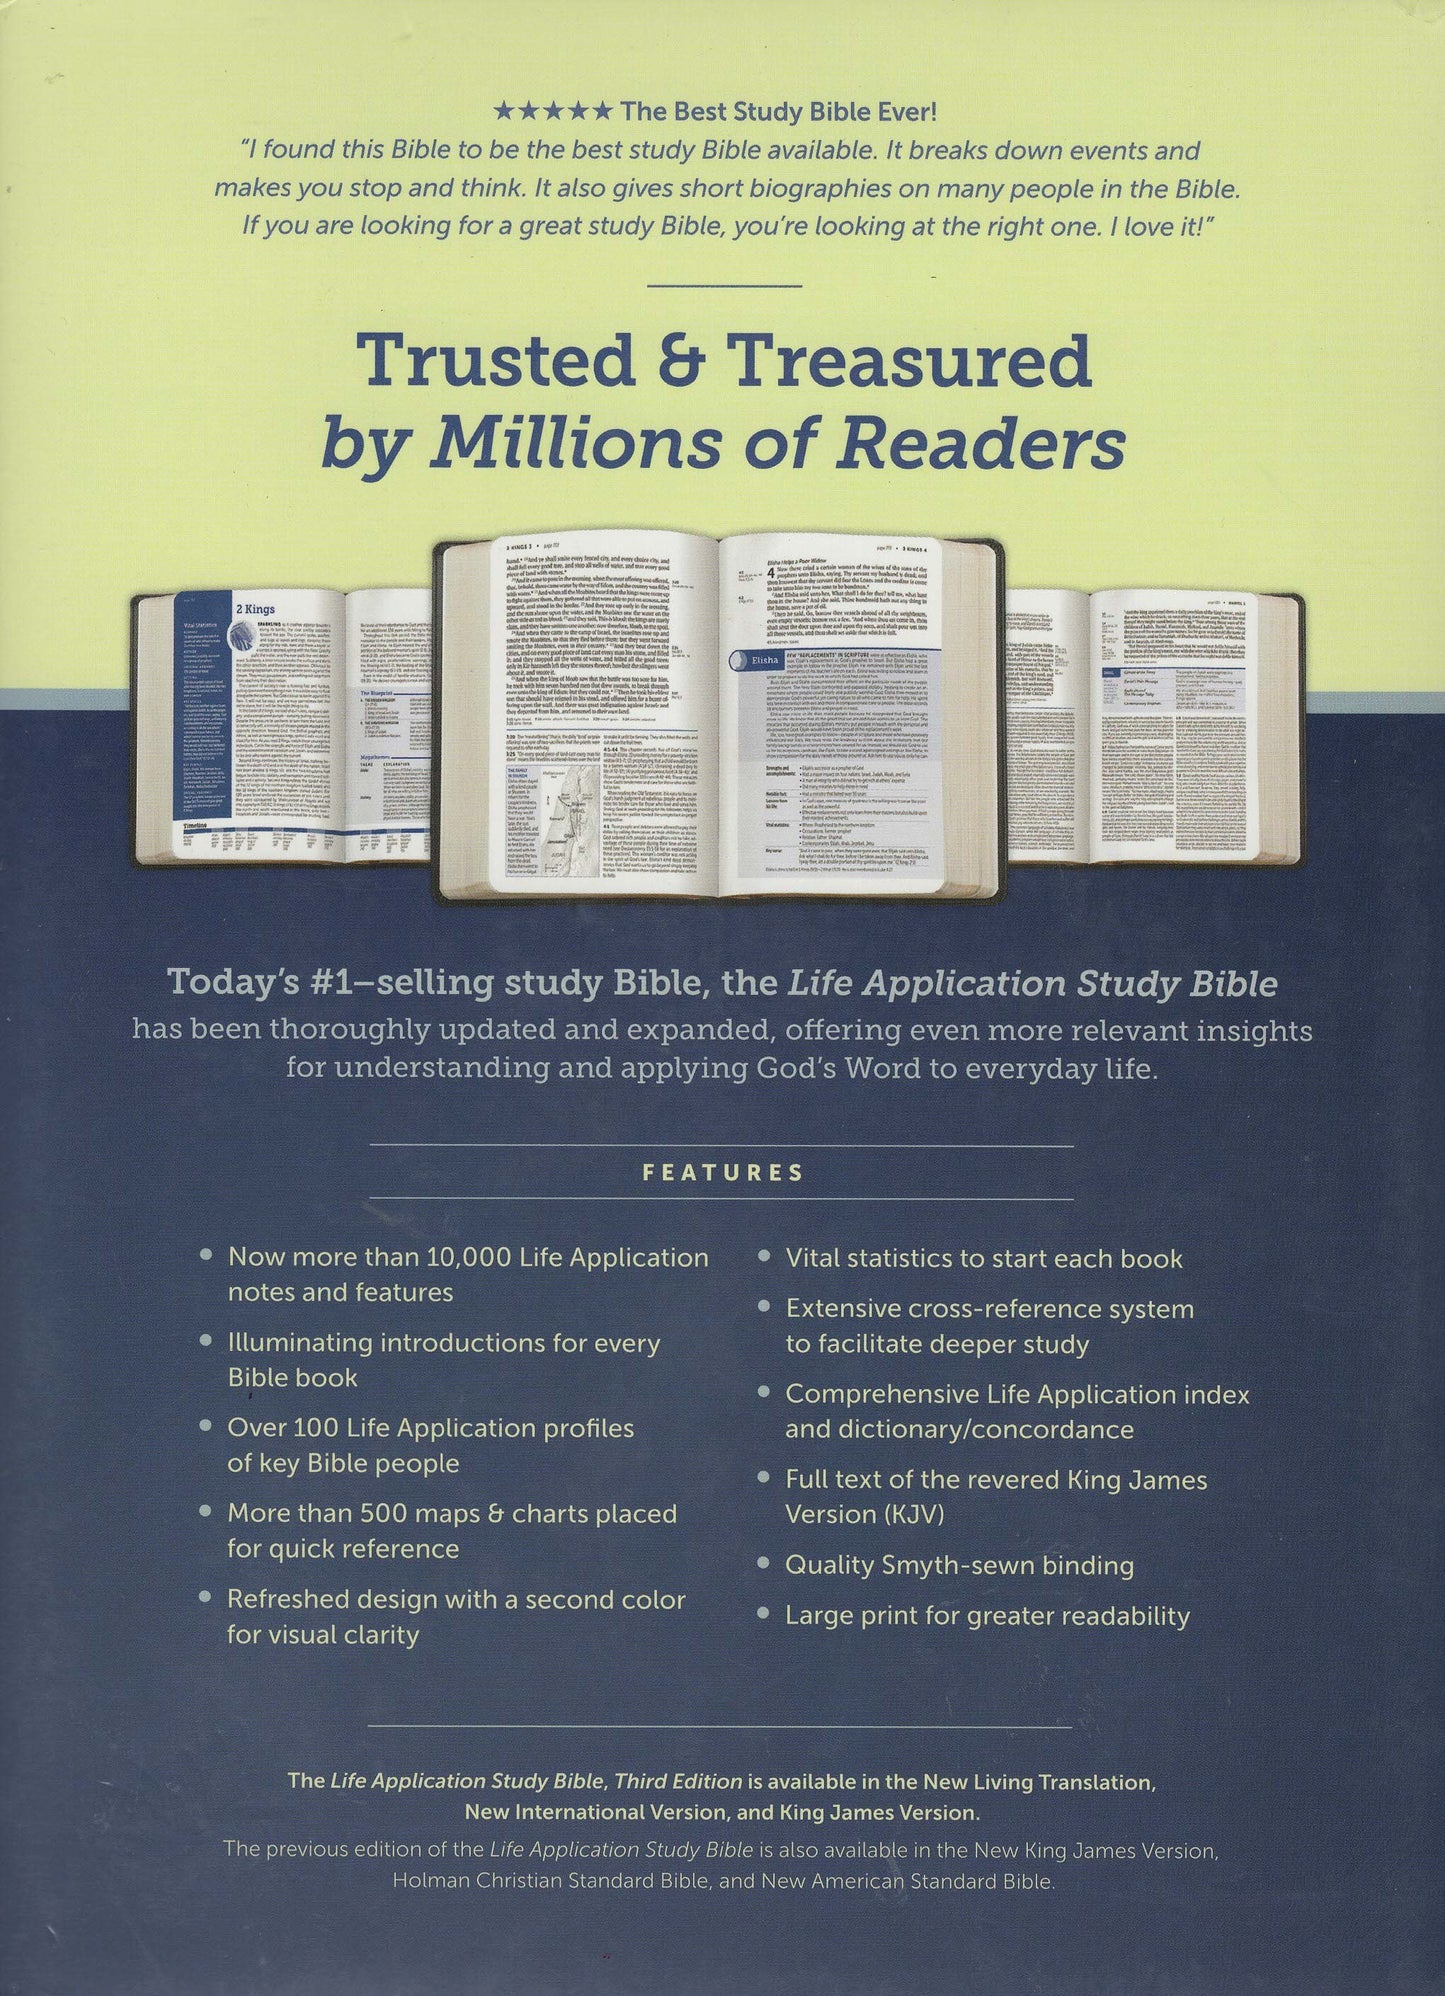 Tyndale KJV Life Application® Study Bible Third Edition - Large Print - Hardcover w/Dust Jacket